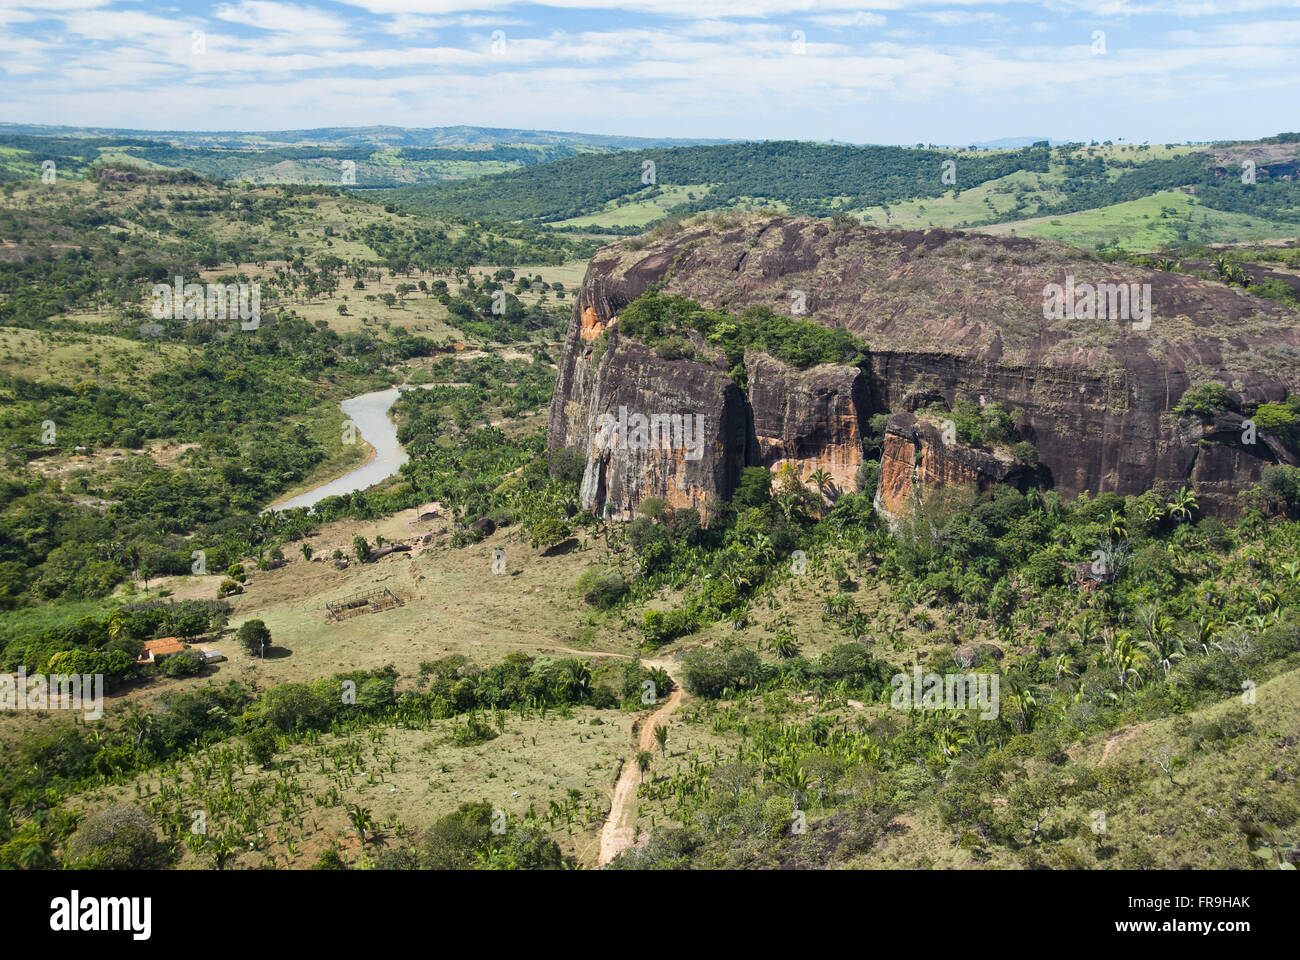 Landscape of the region of Poxoreu - Plateau of Cliffs Stock Photo